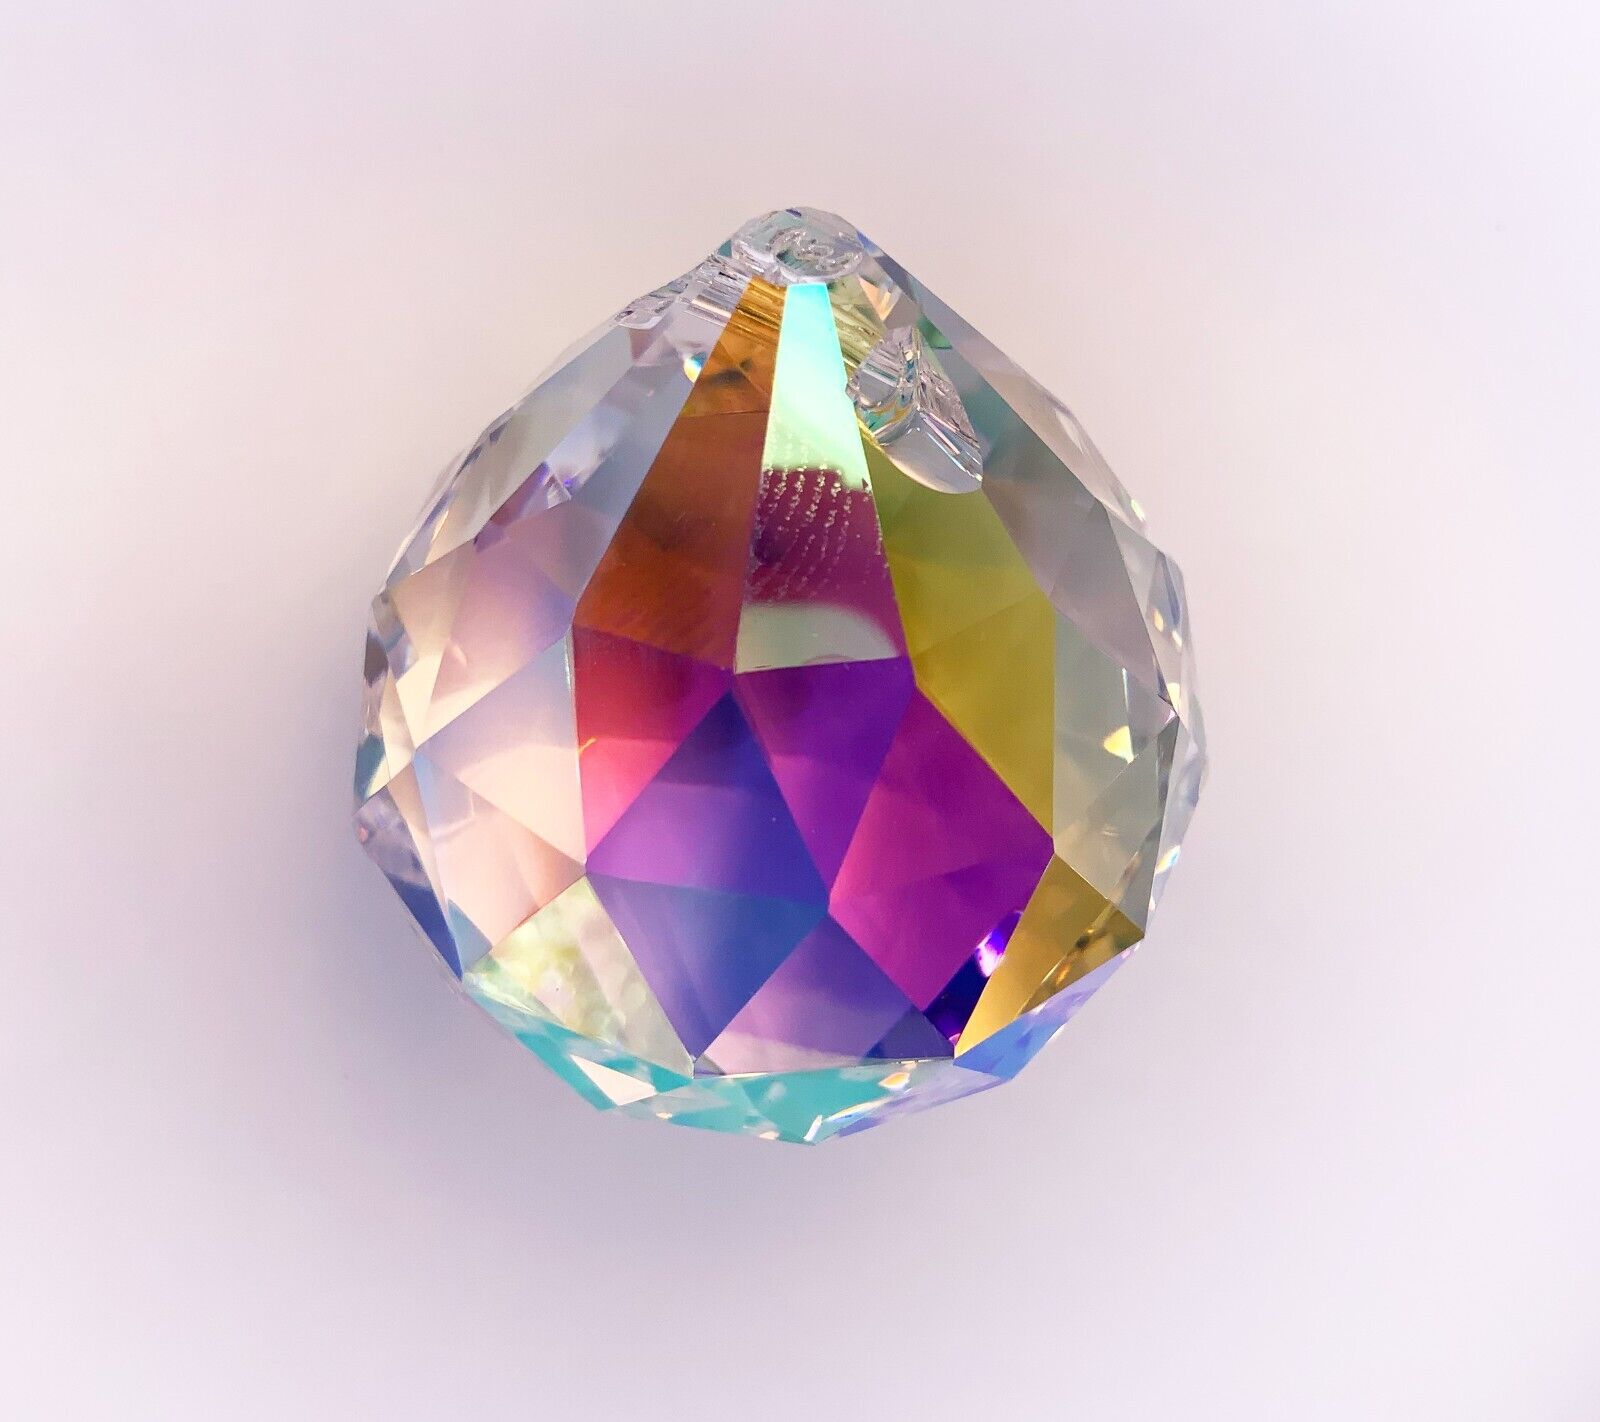 20mm Asfour Crystal, Clear AB, Crystal Sun Catcher, Crystal Ball Prisms - 10 Pcs